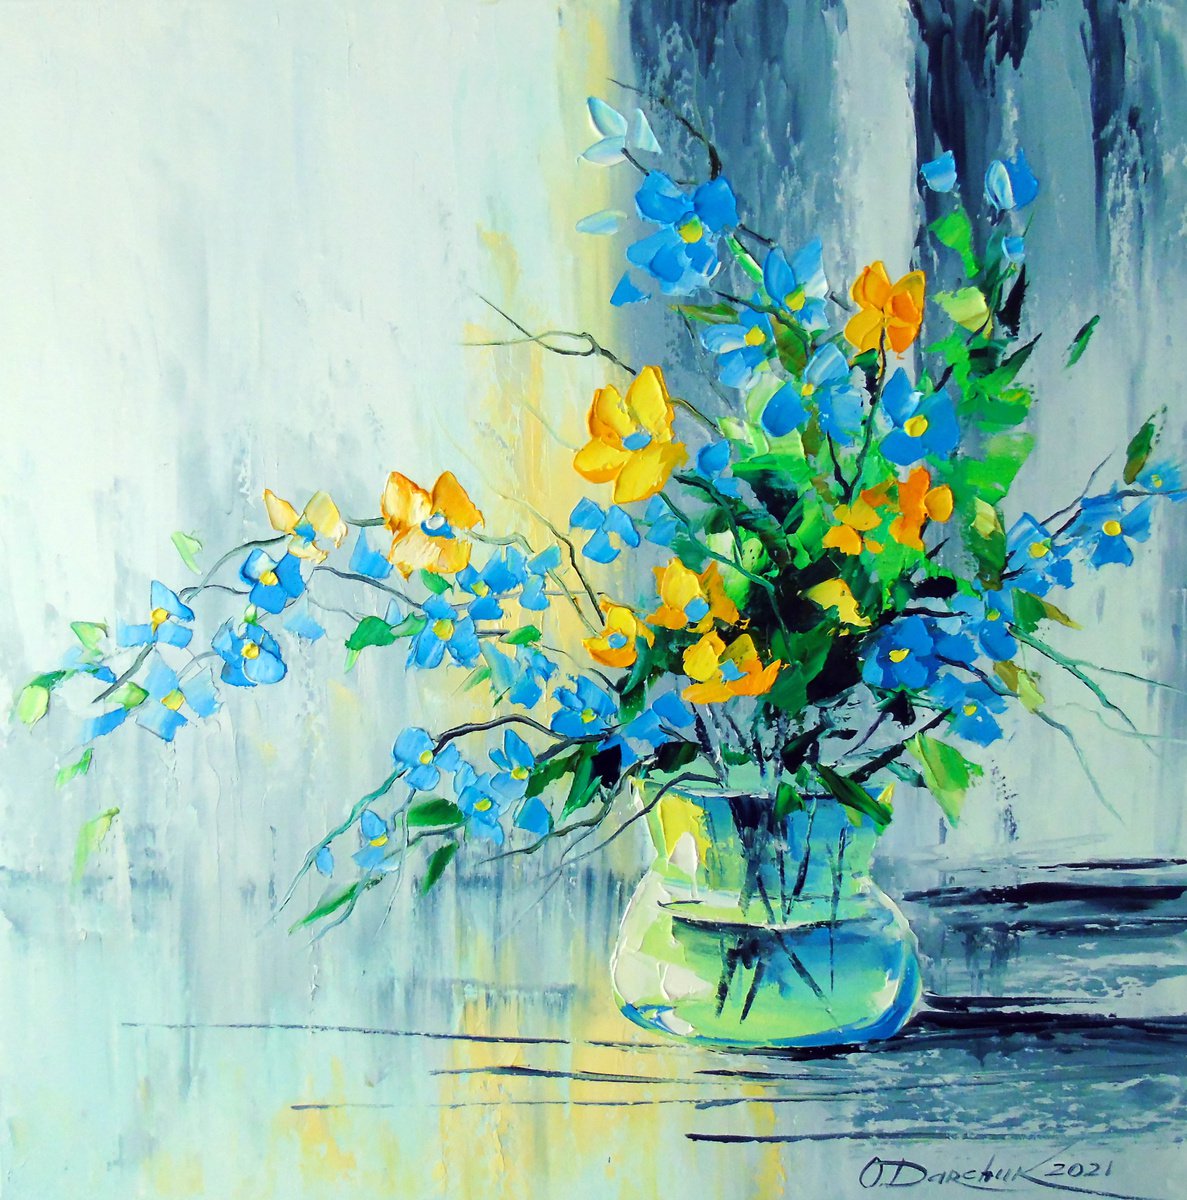 Crystal Glass Rose 2 - Kay Adams - Digital Art, Flowers, Plants, & Trees,  Flowers, Flowers I-Z, Roses - ArtPal